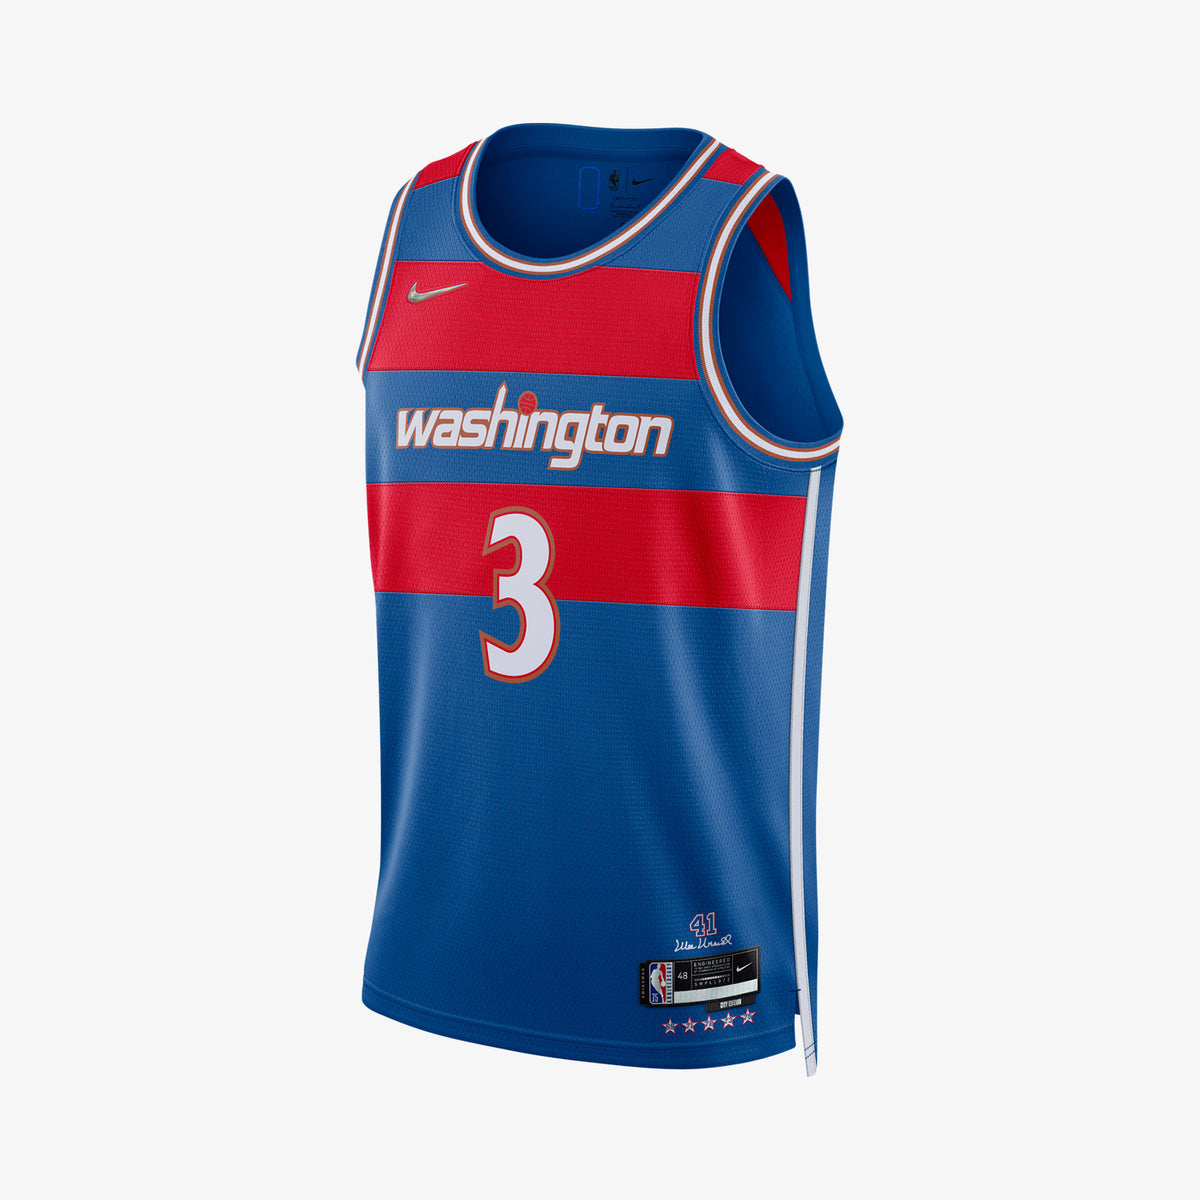 Washington Wizards Gear, Wizards Jerseys, Store, Wizards Shop, Apparel